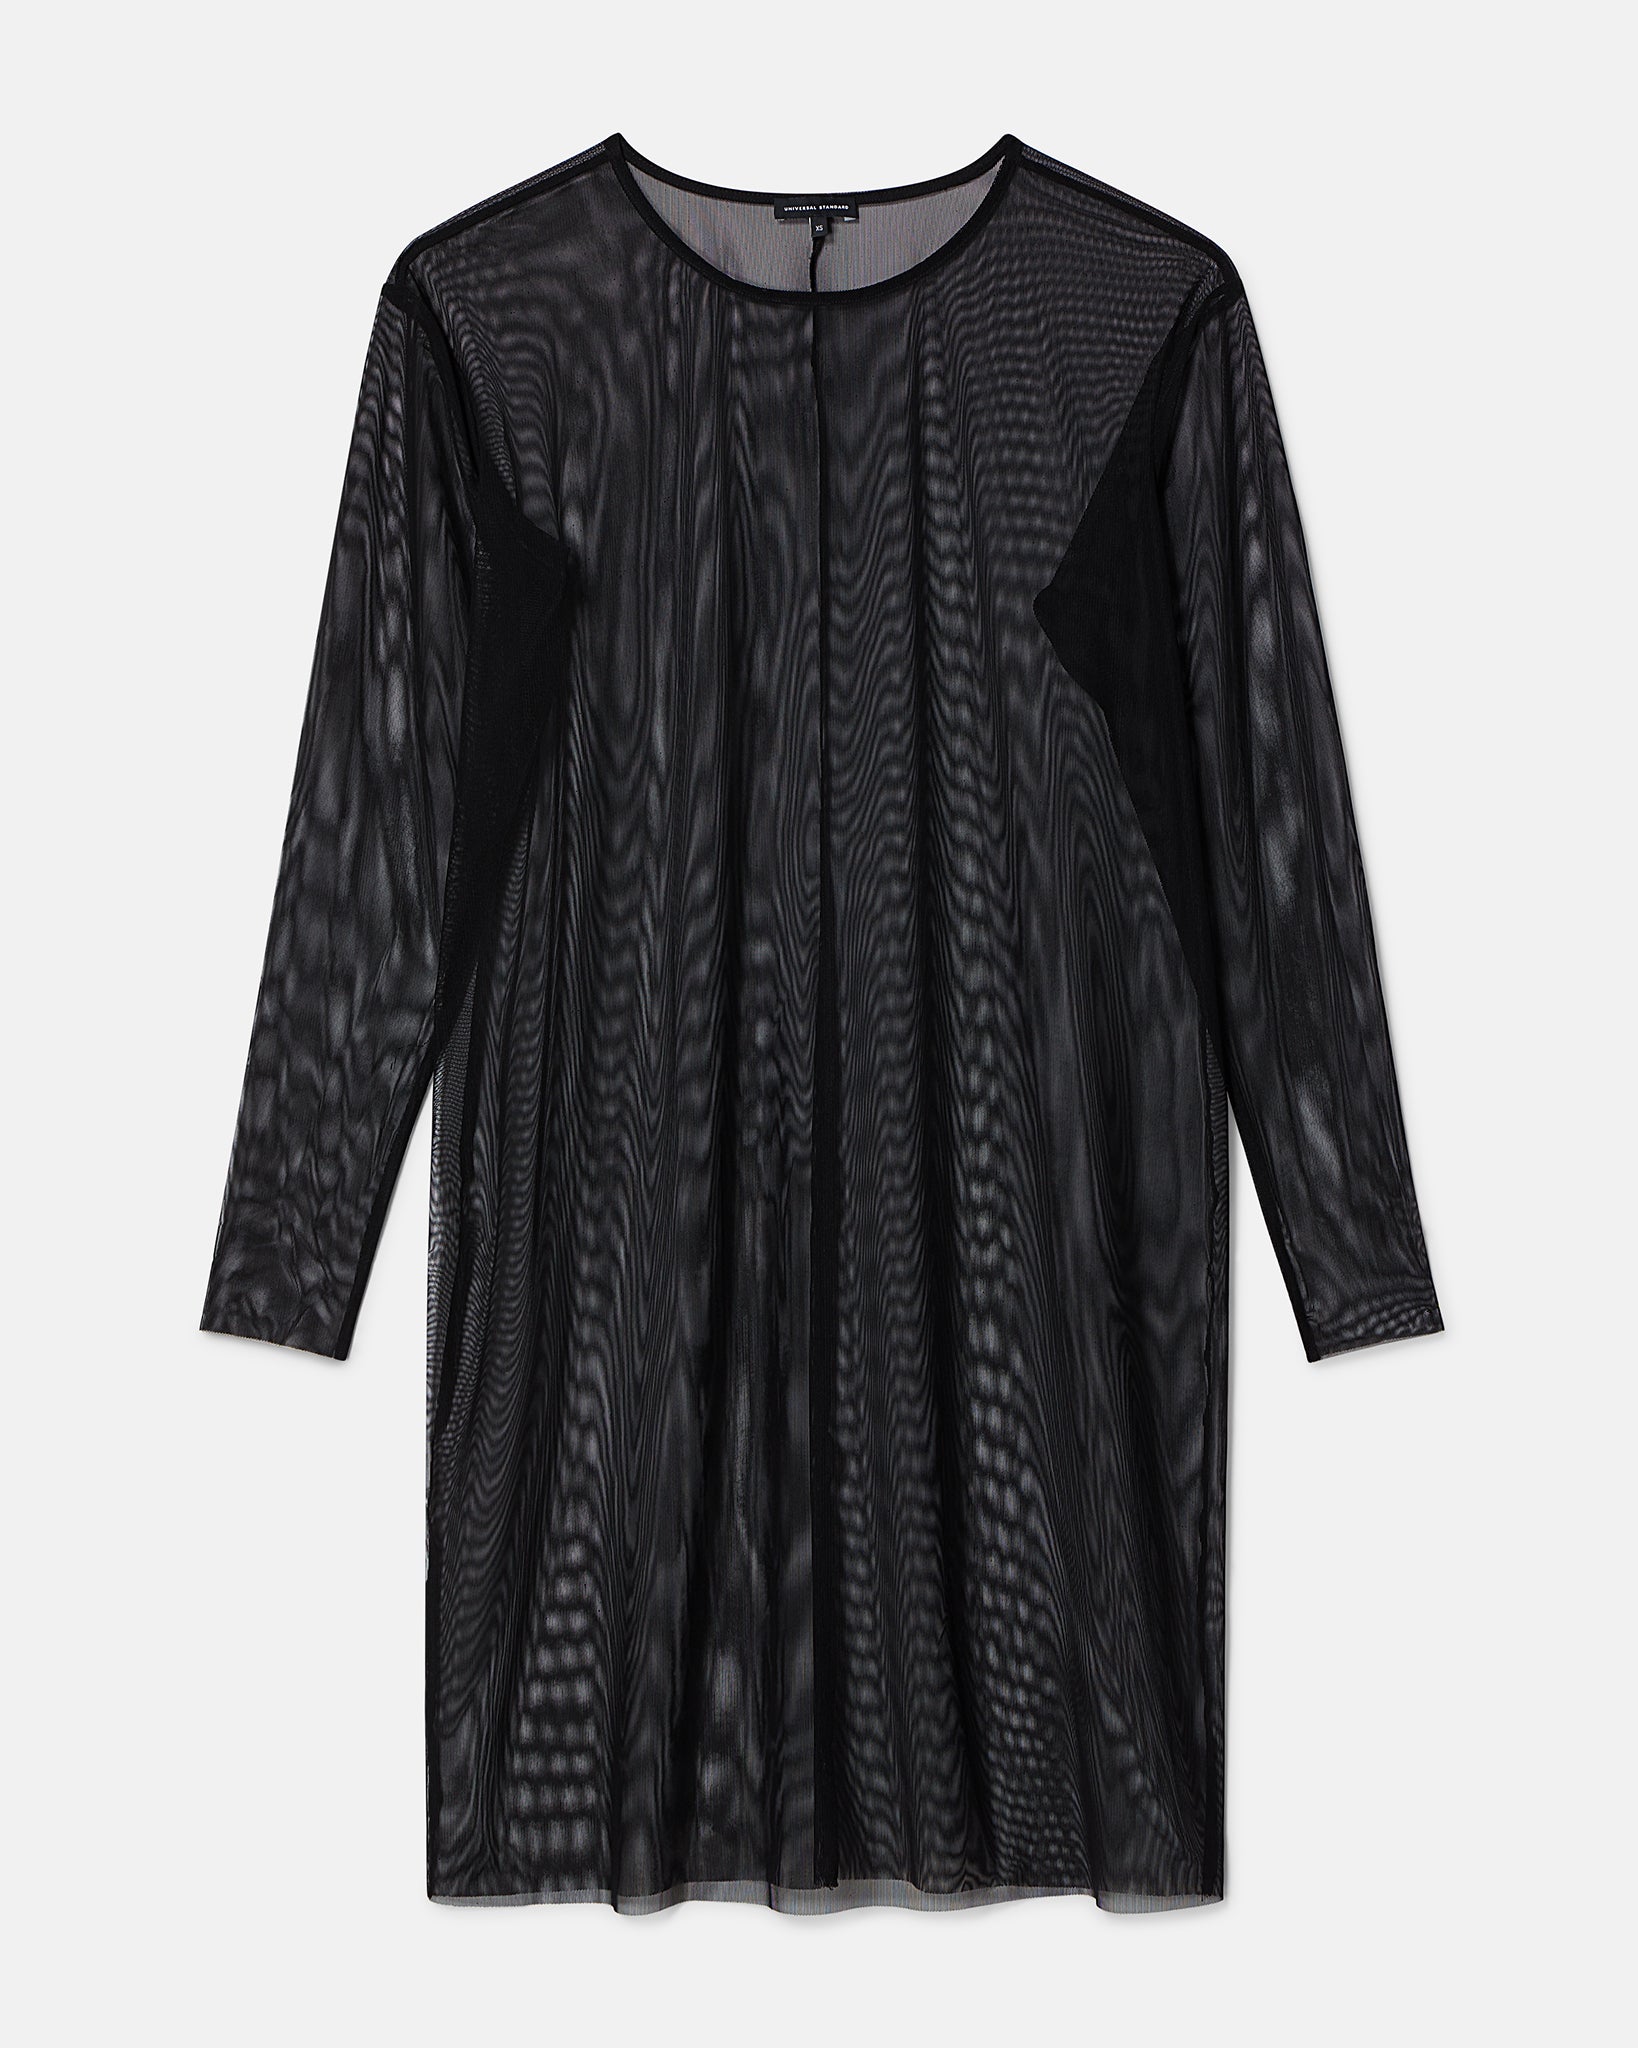 Grace Ruffle Black Long Sleeve Bodysuit Dress-Soft See-Through Mesh Fabric  Body Suit Top-High Neck Design